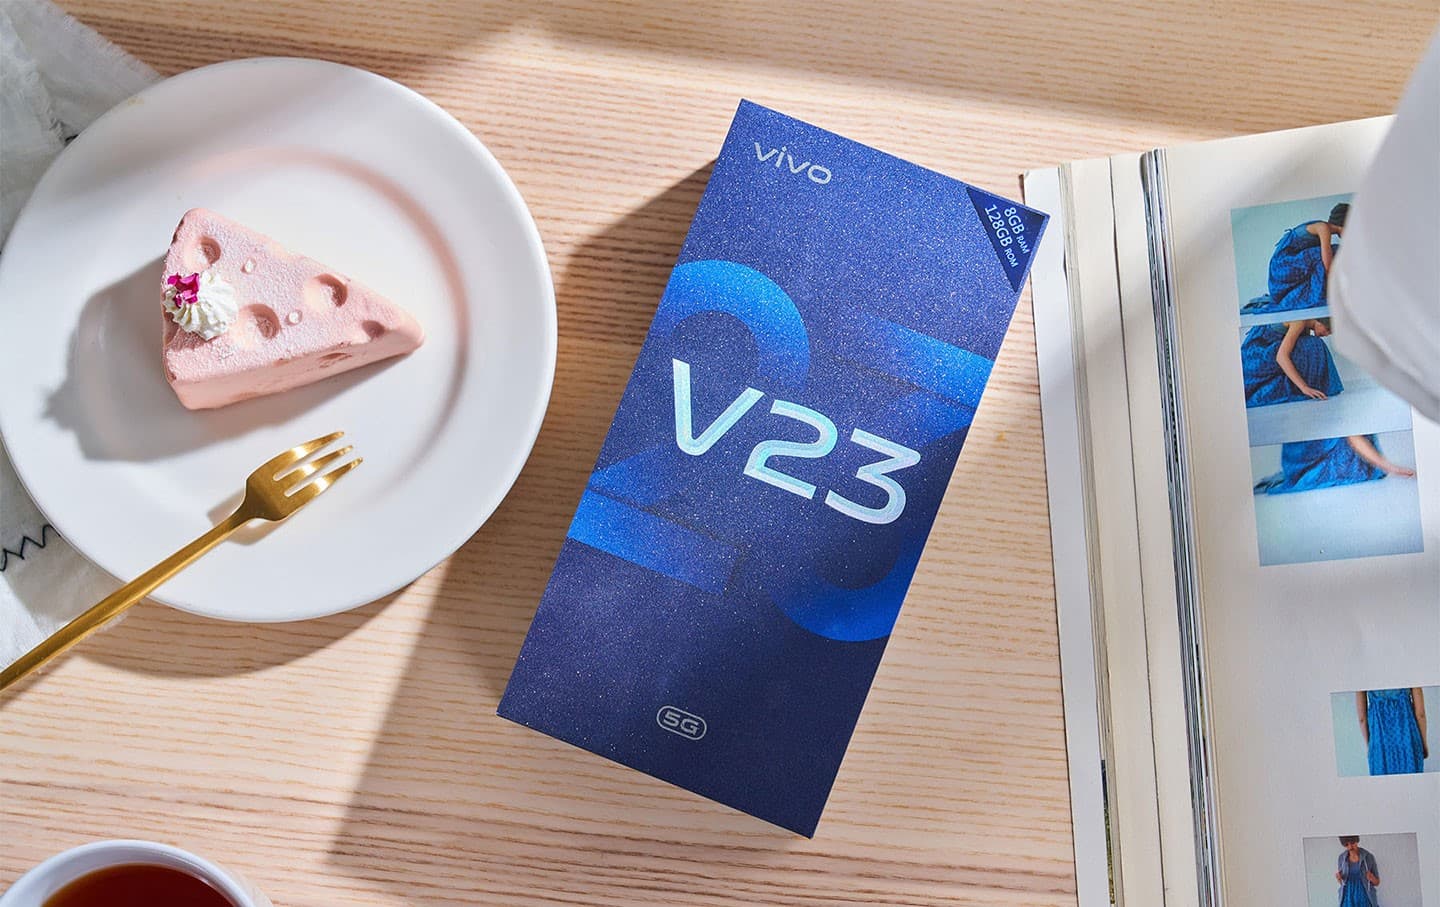 vivo V23 5G 的外盒帶有濃厚的夢幻色彩，雖然視覺設計上以產品的型號為主，但特殊的印刷處理方面讓人印象深刻。